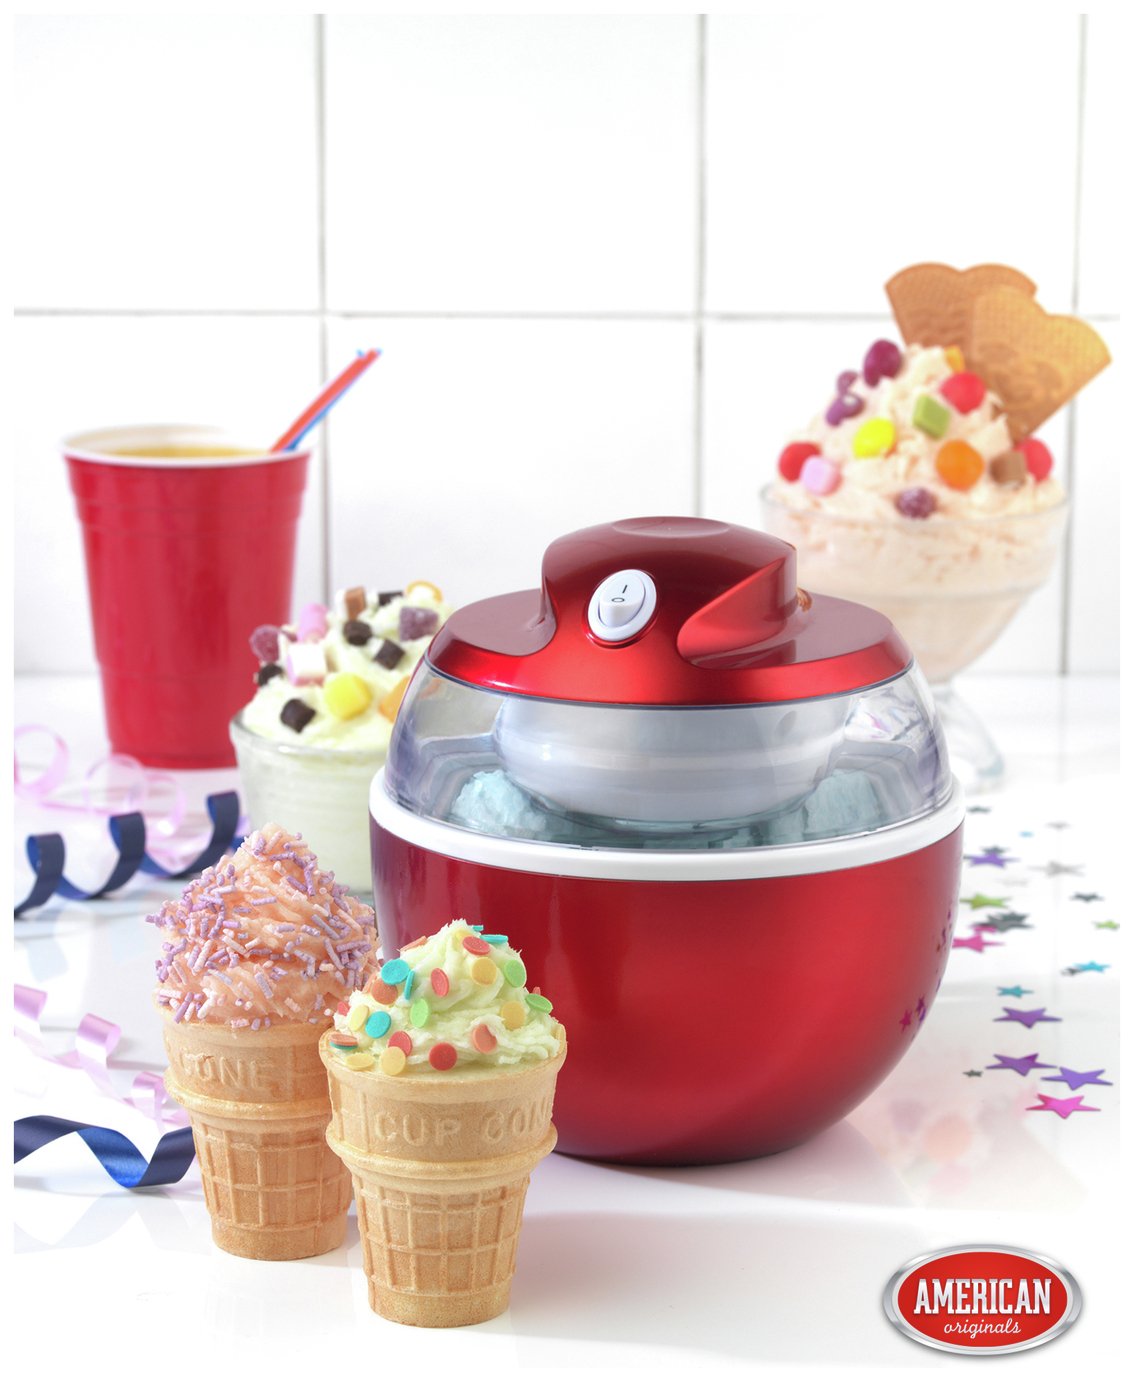 American Originals 0.6L Ice Cream Maker Review